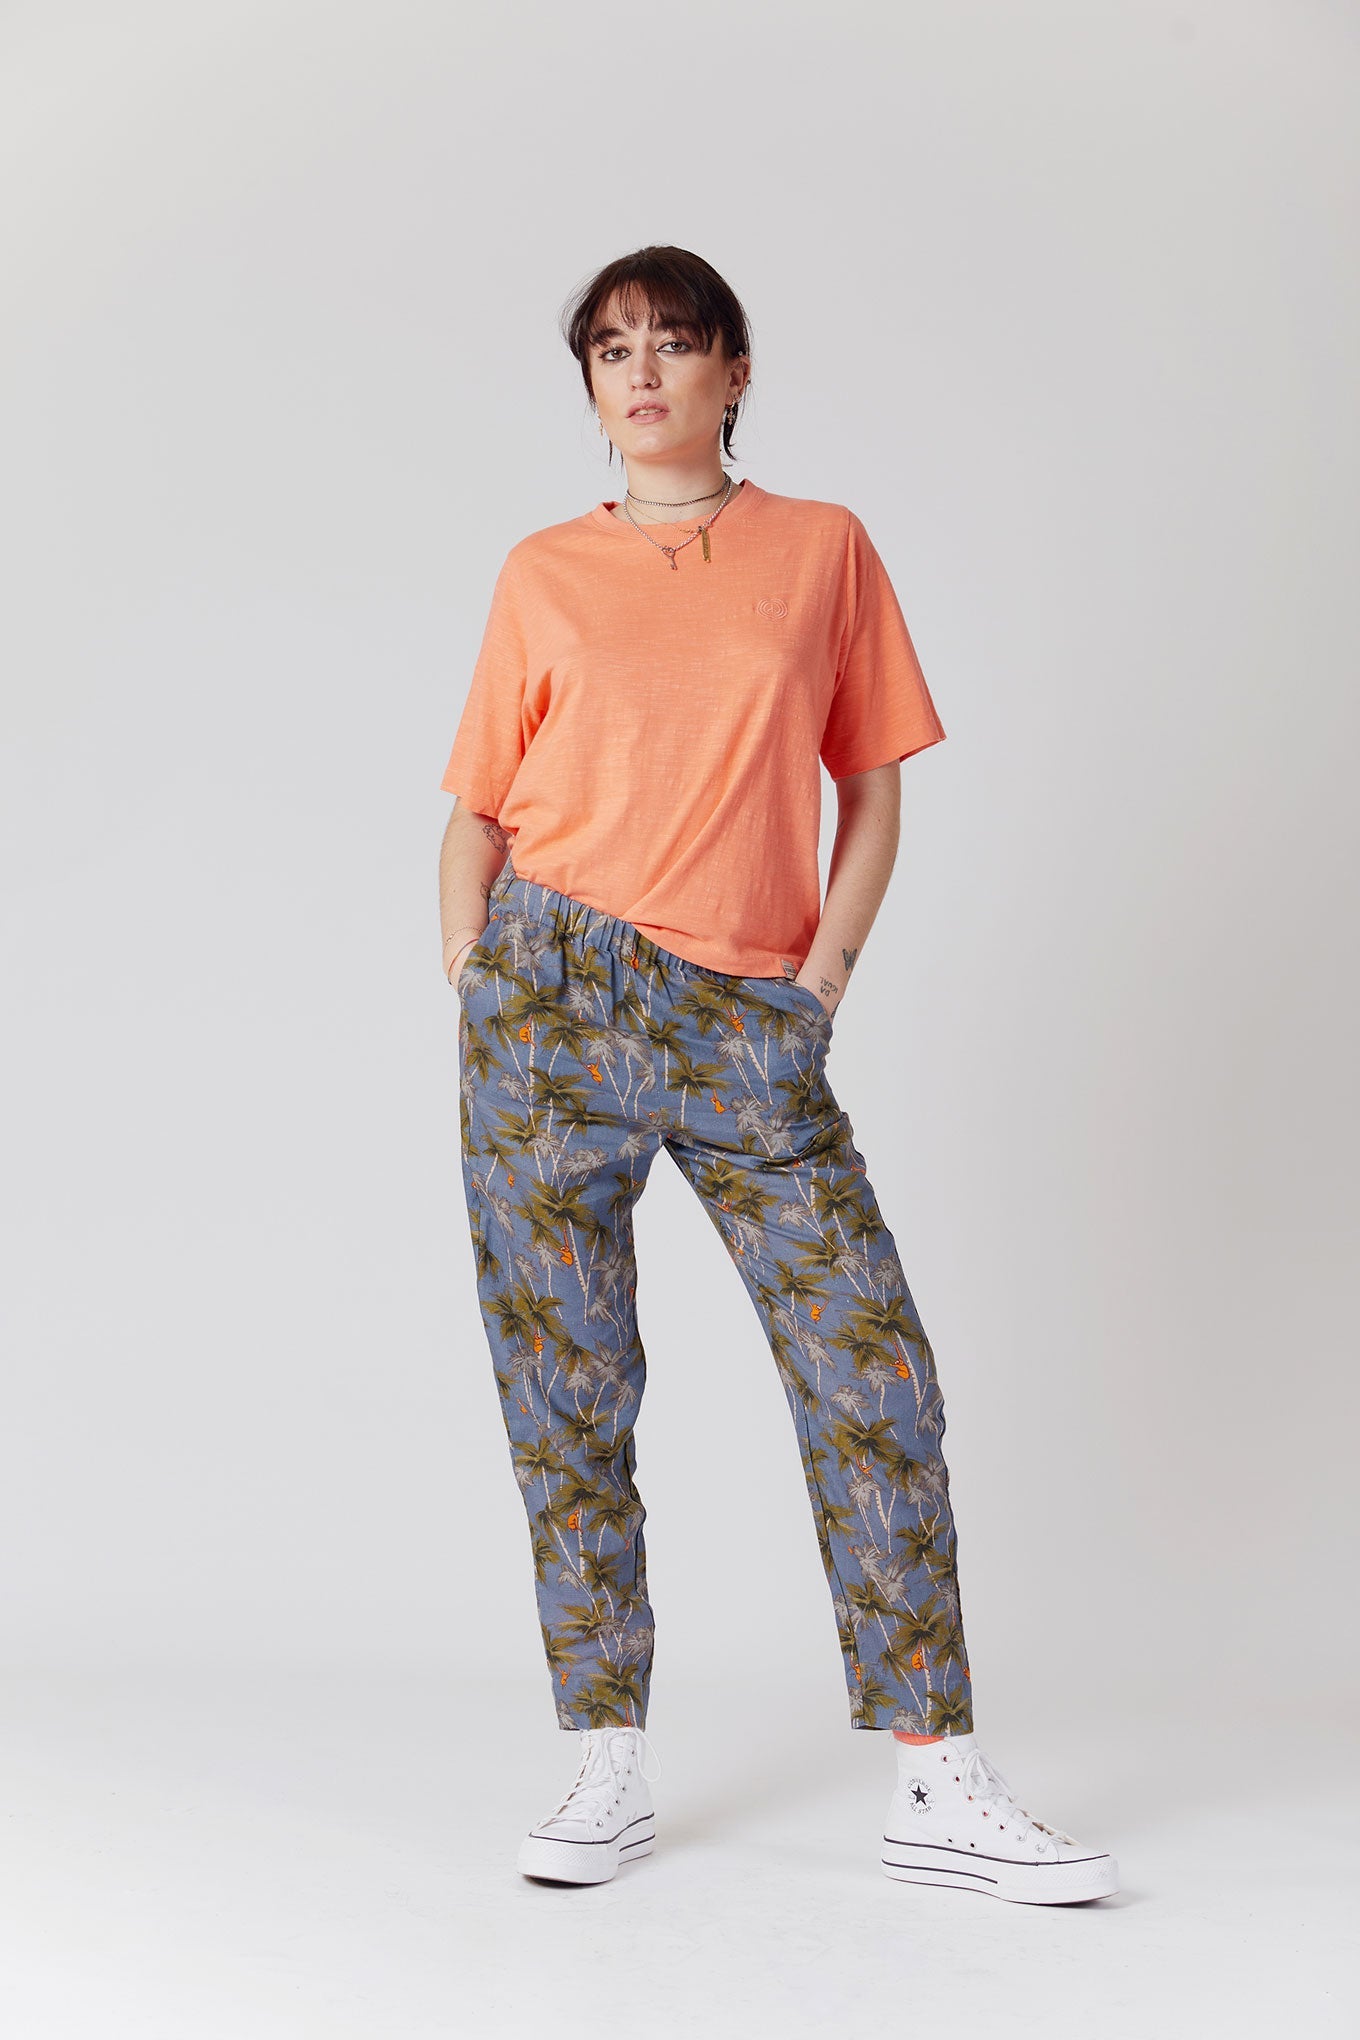 SALE Cairo Trousers in odd colours and sizes  Patricia Dawson